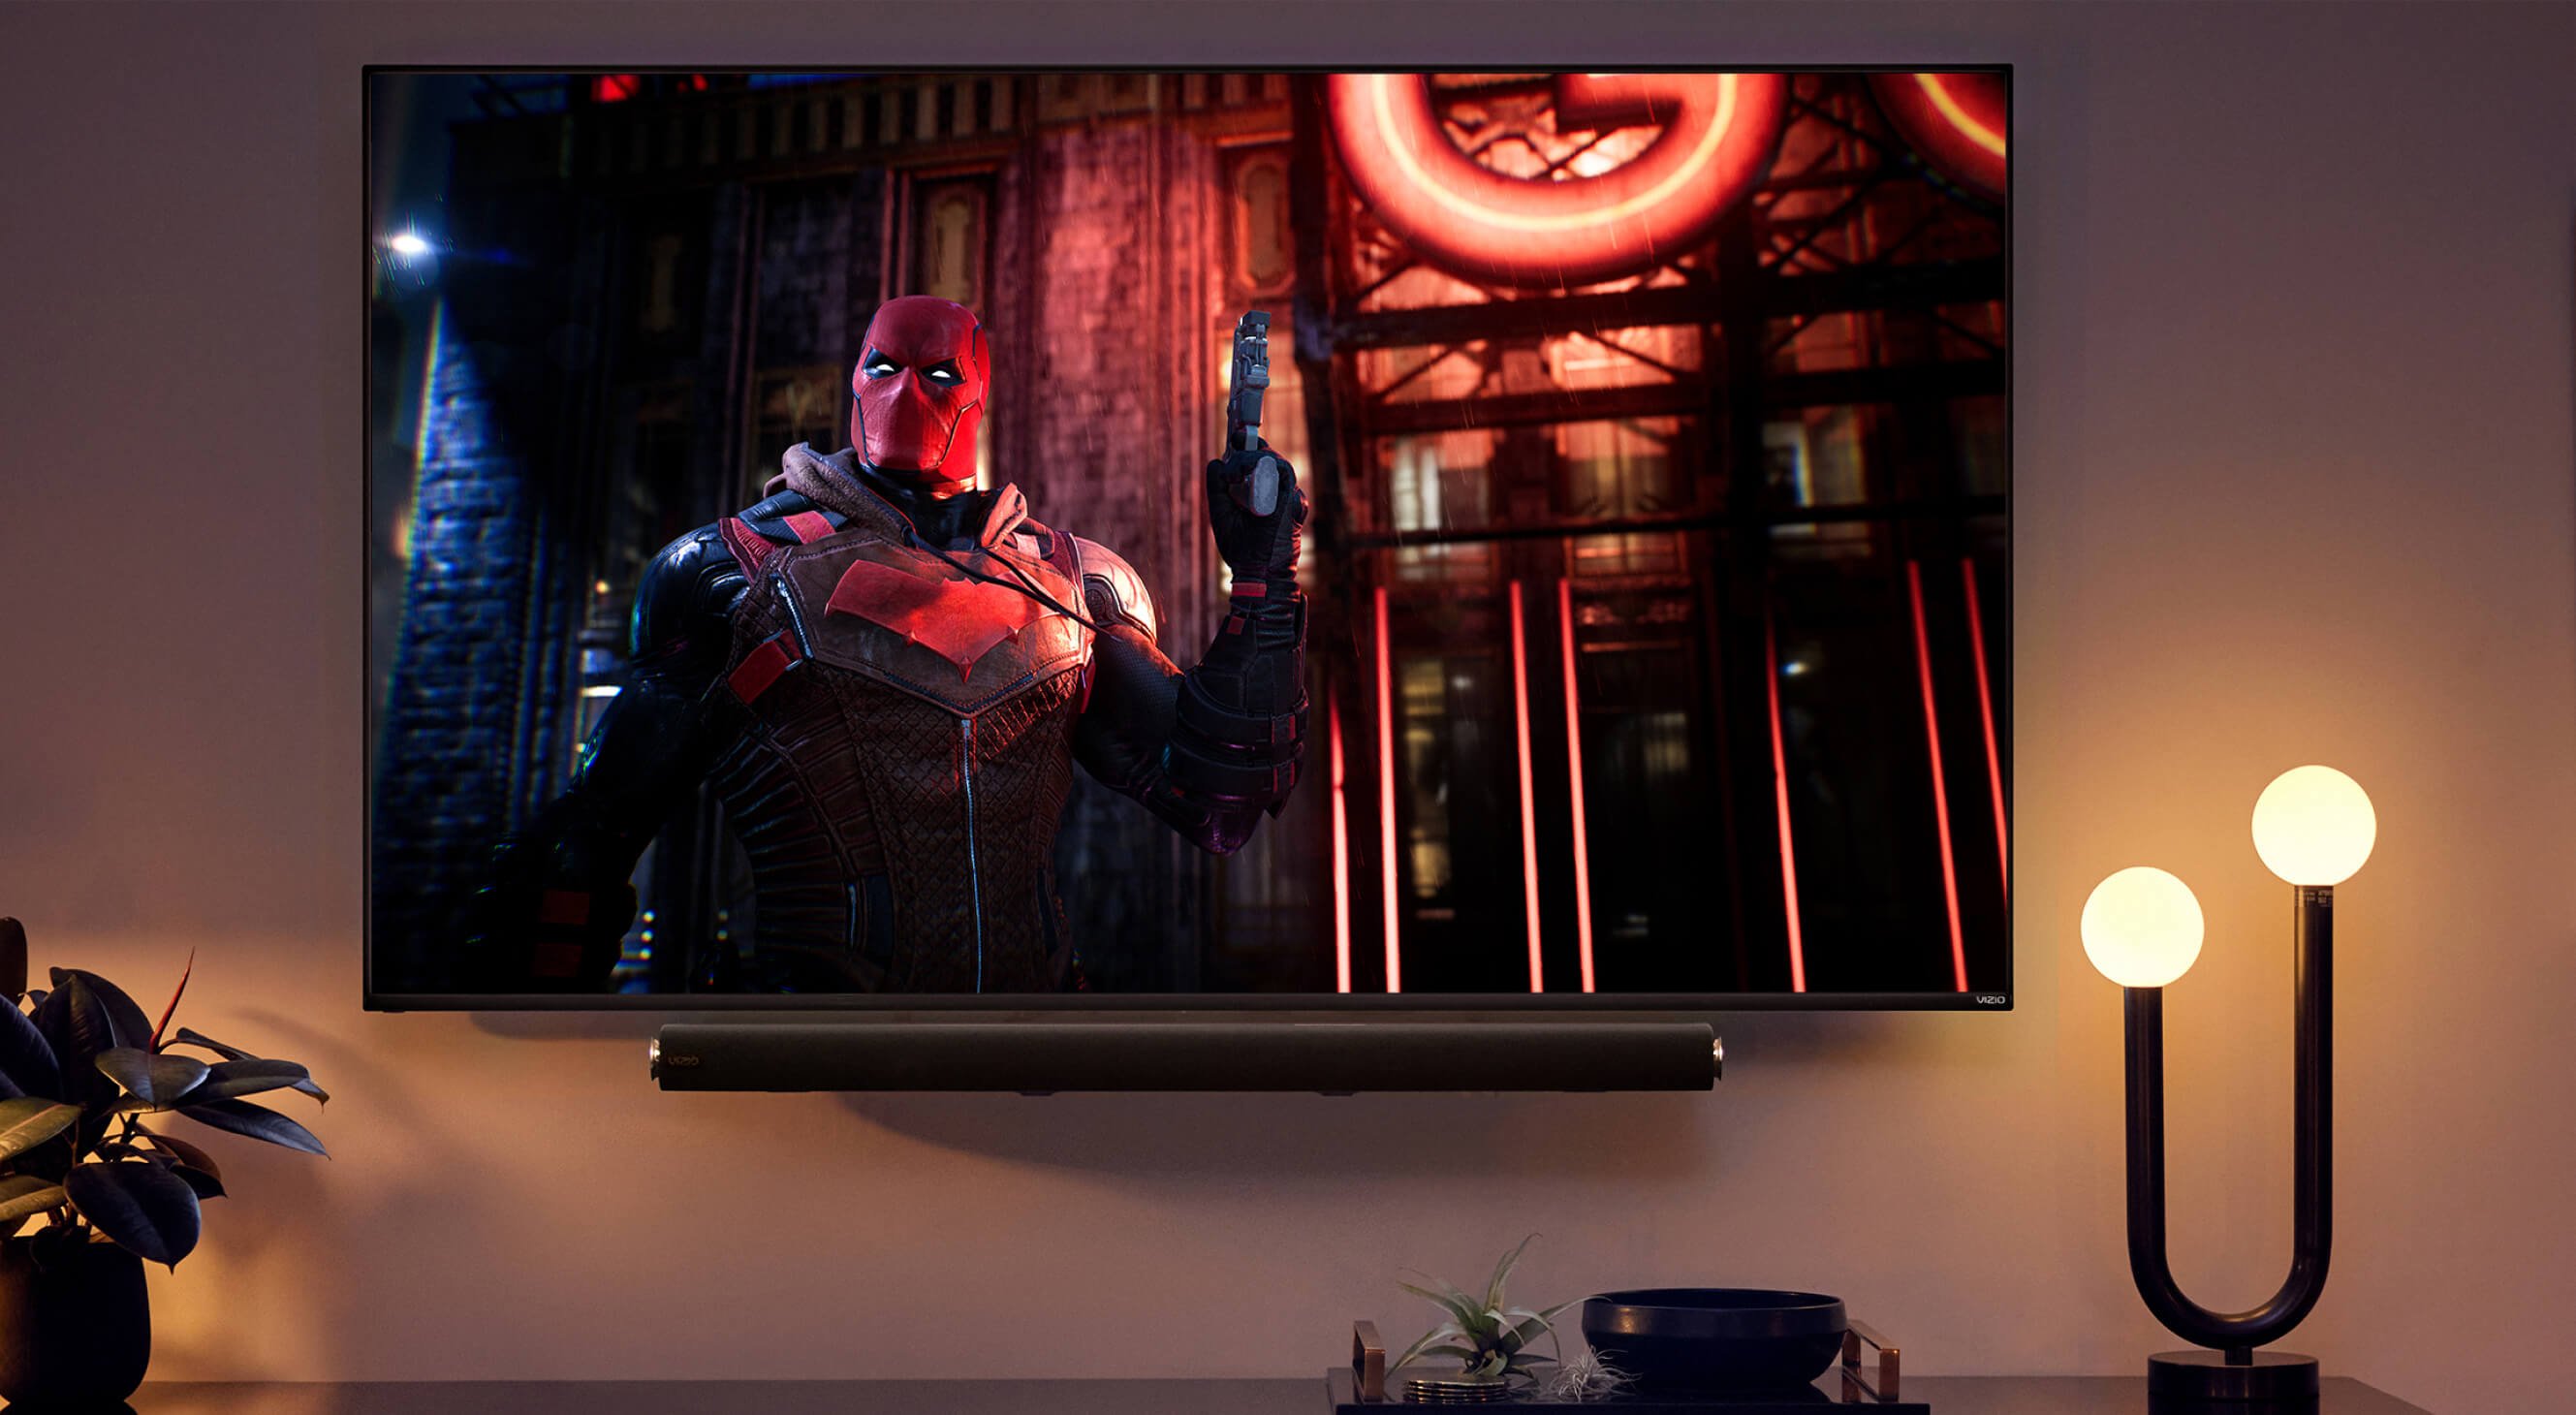 Best 4k TVs for Gaming